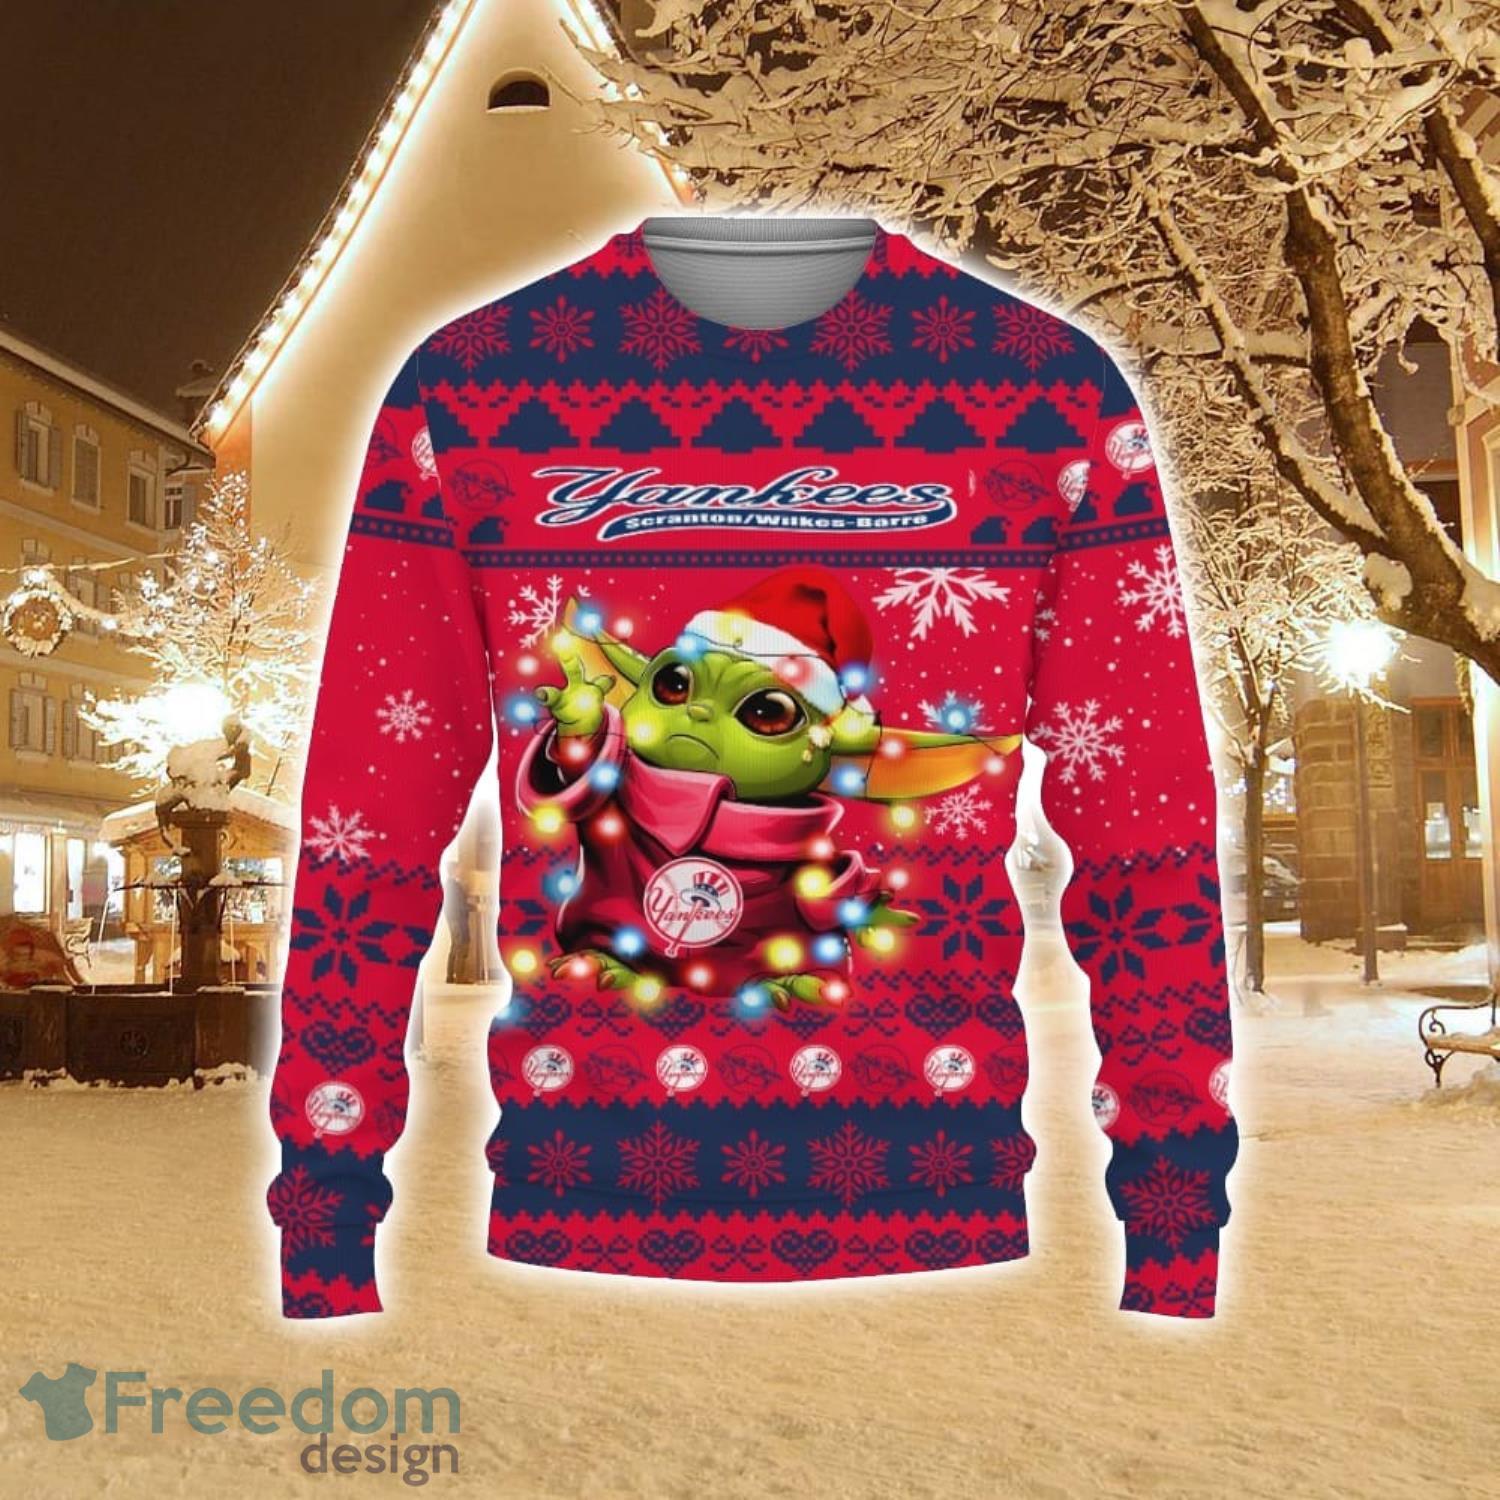 Brooklyn Nets Cute Baby Yoda Star Wars 3D Ugly Christmas Sweater Unisex Men  and Women Christmas Gift - Banantees